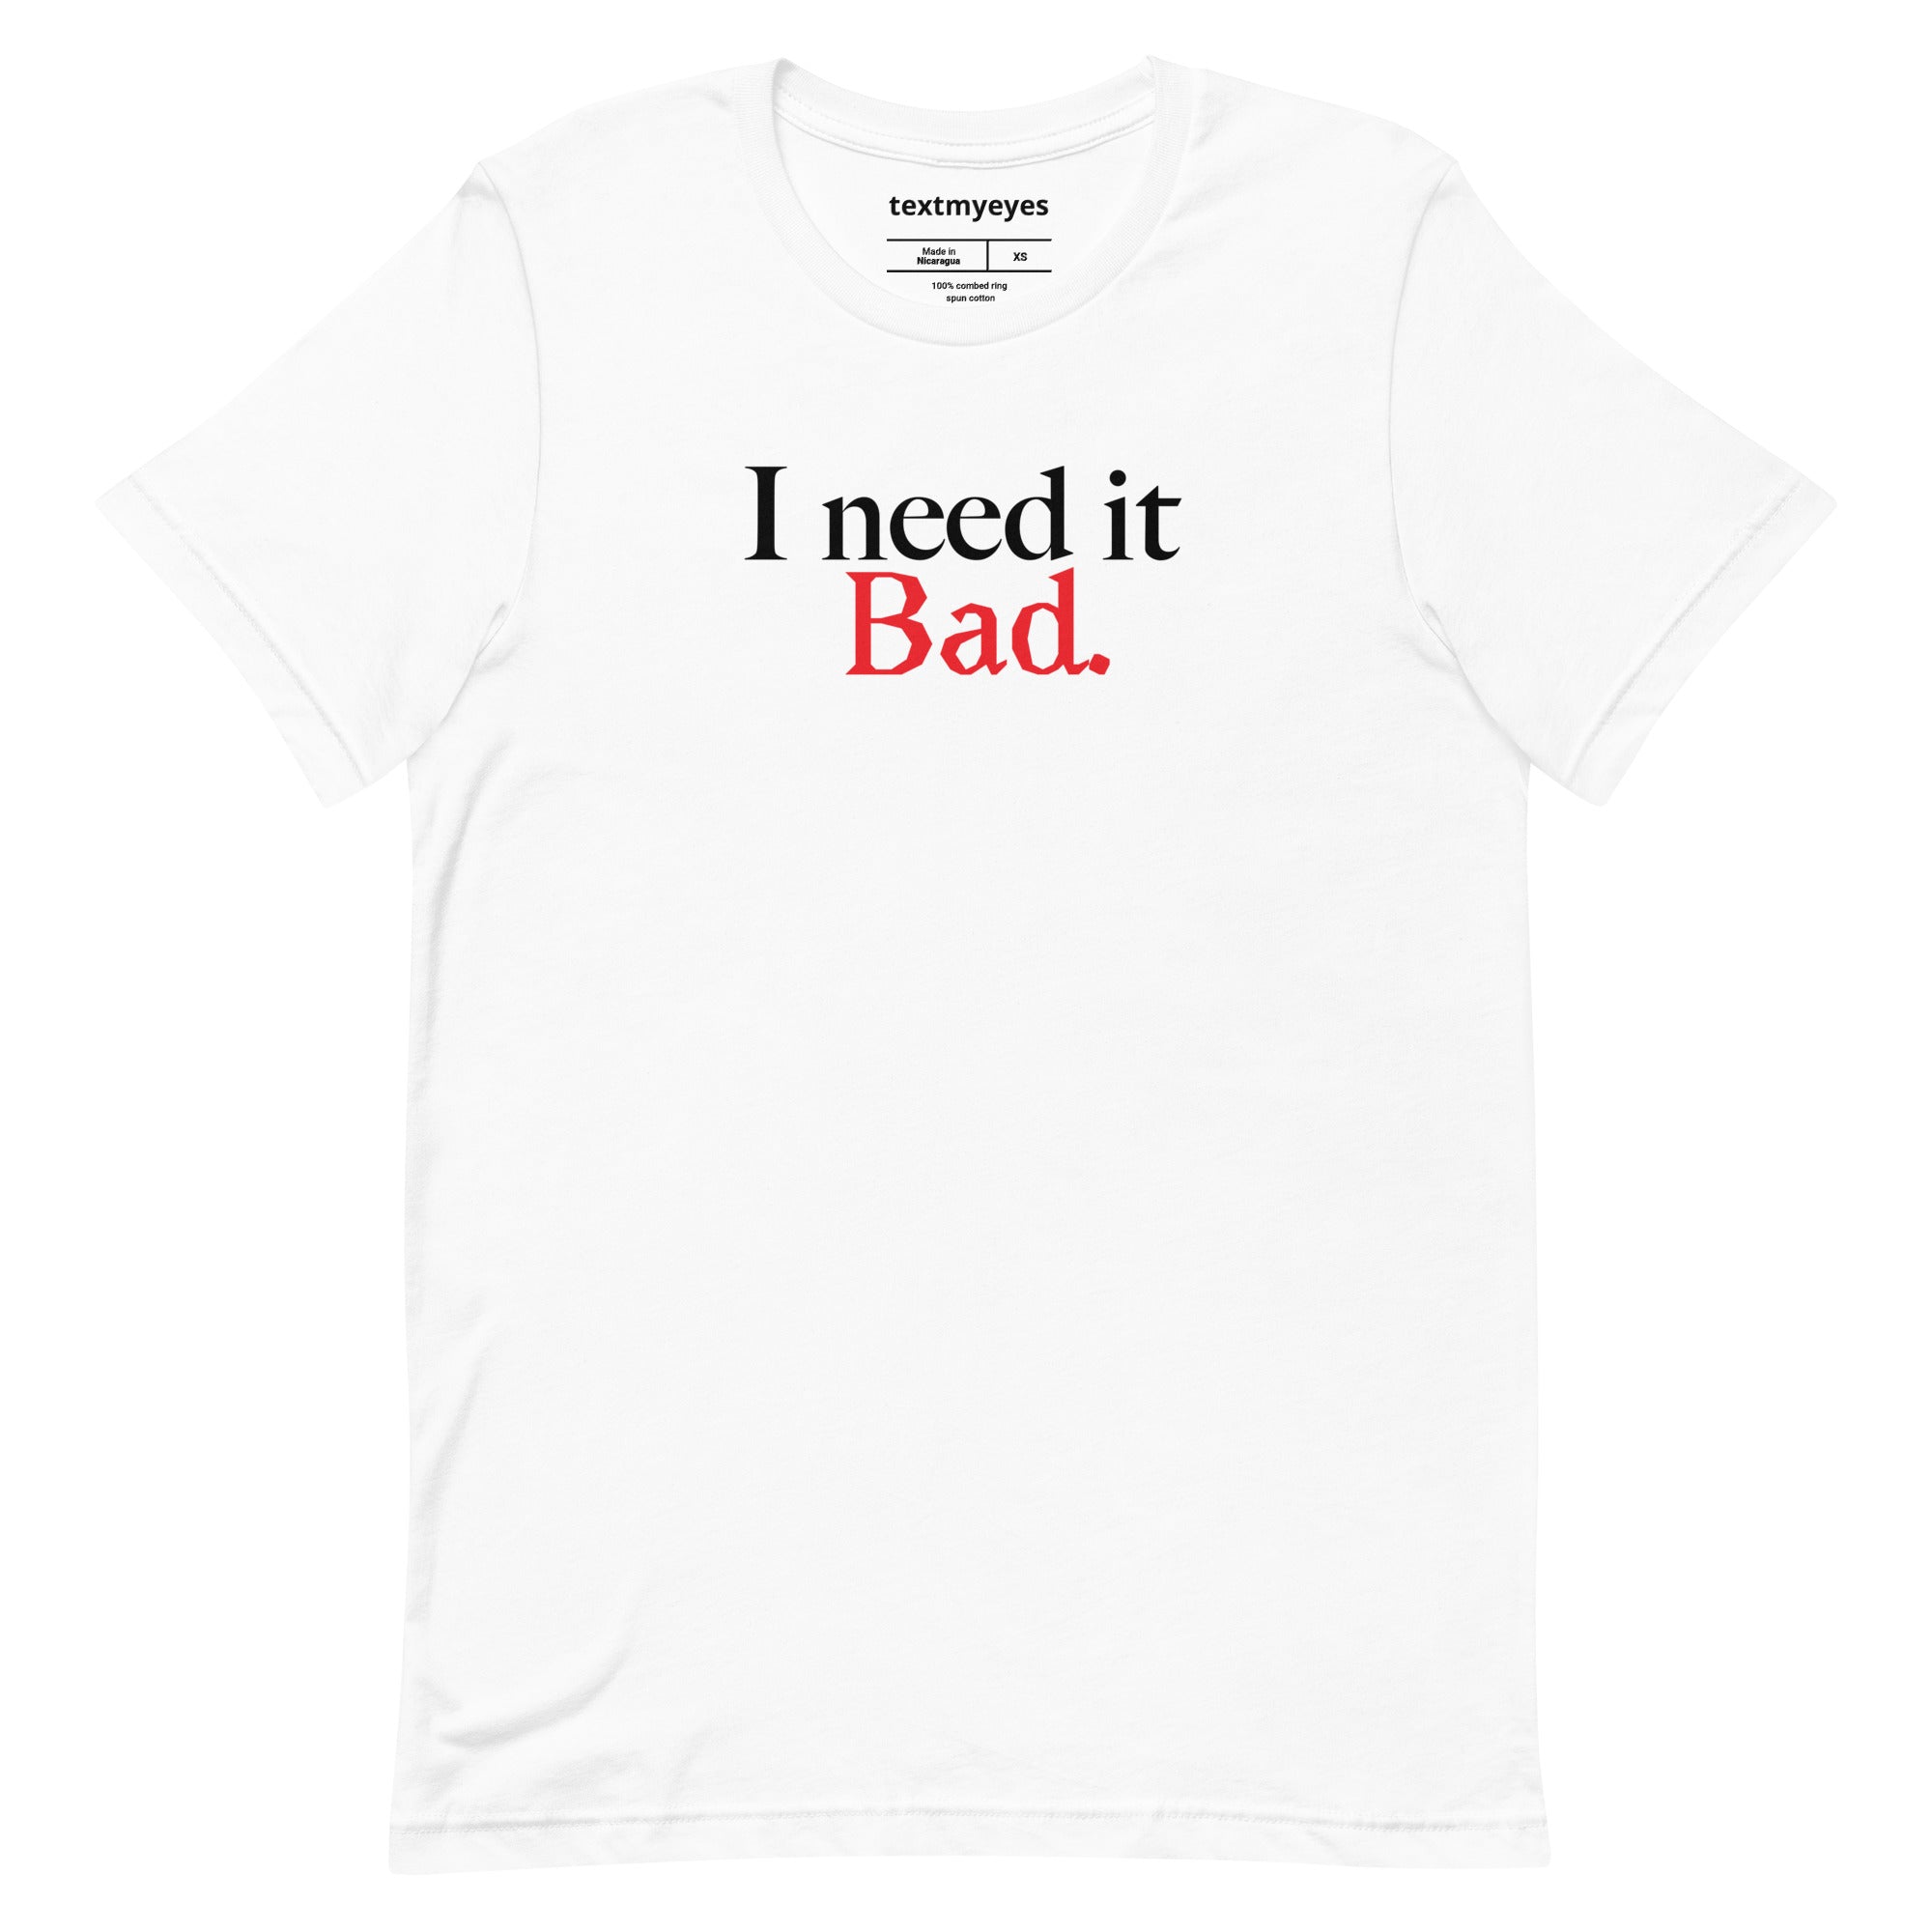 I need it Bad.